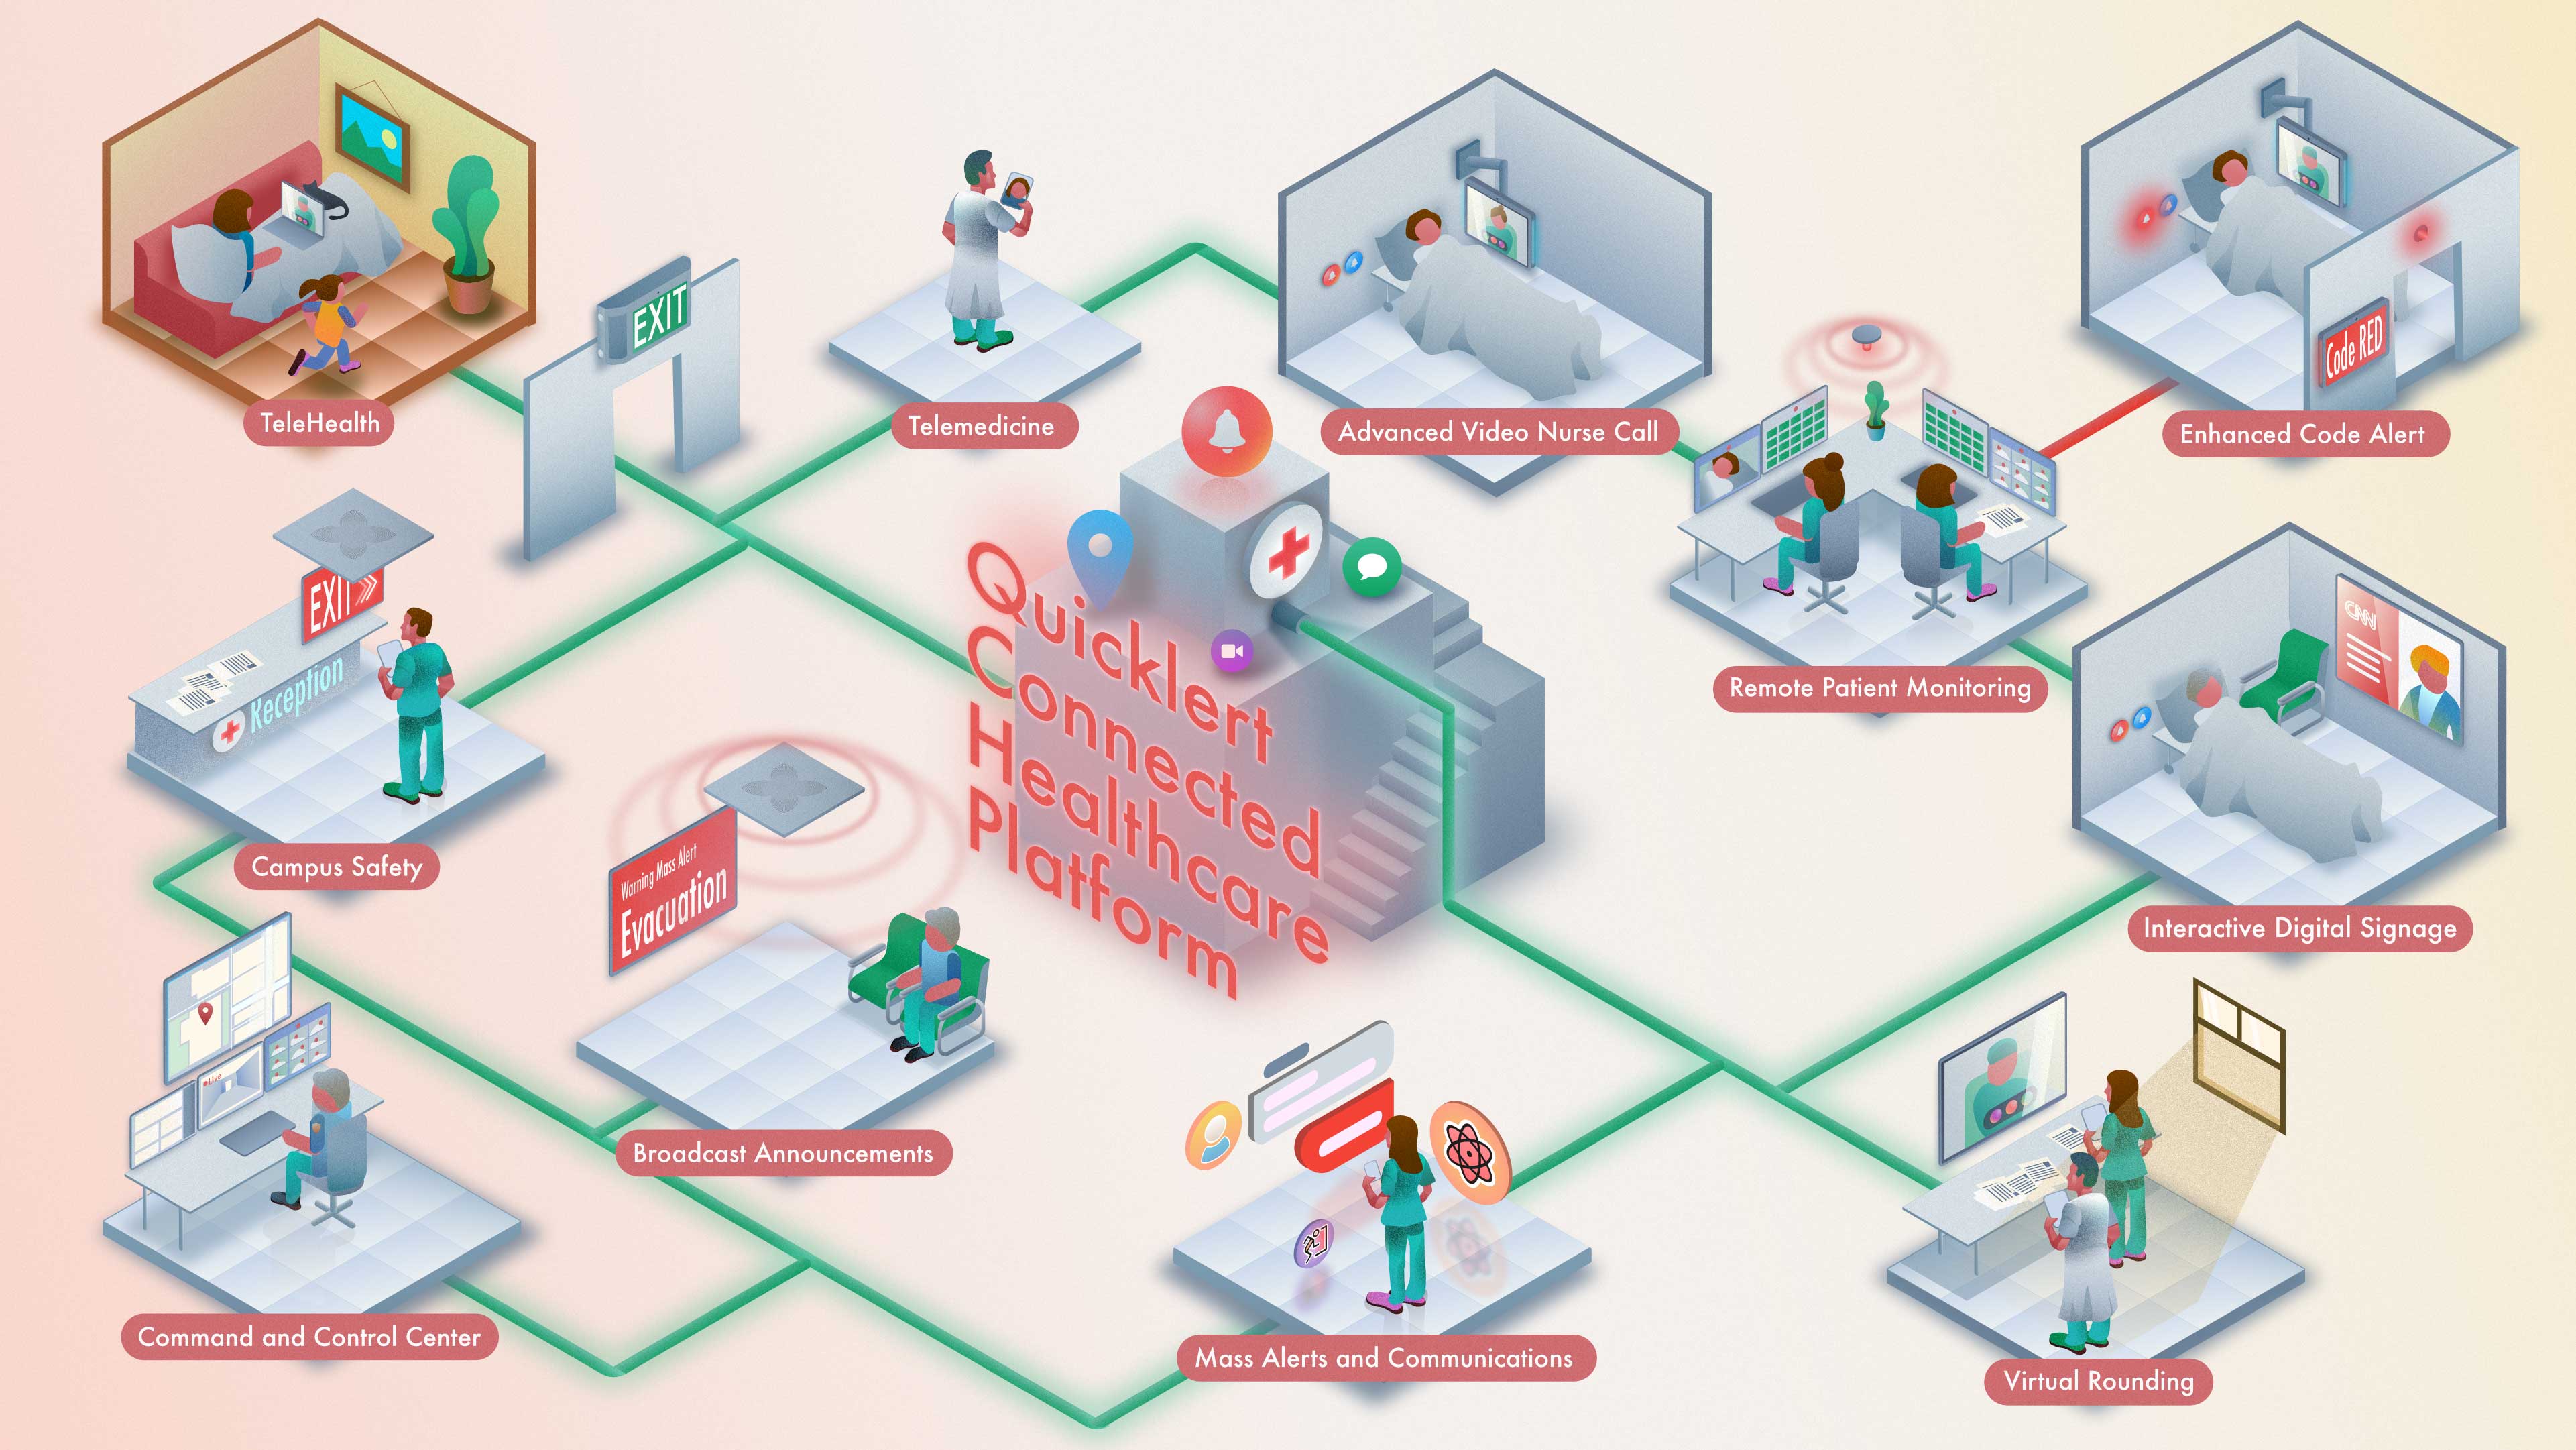 The Quicklert Connected Healthcare Platform